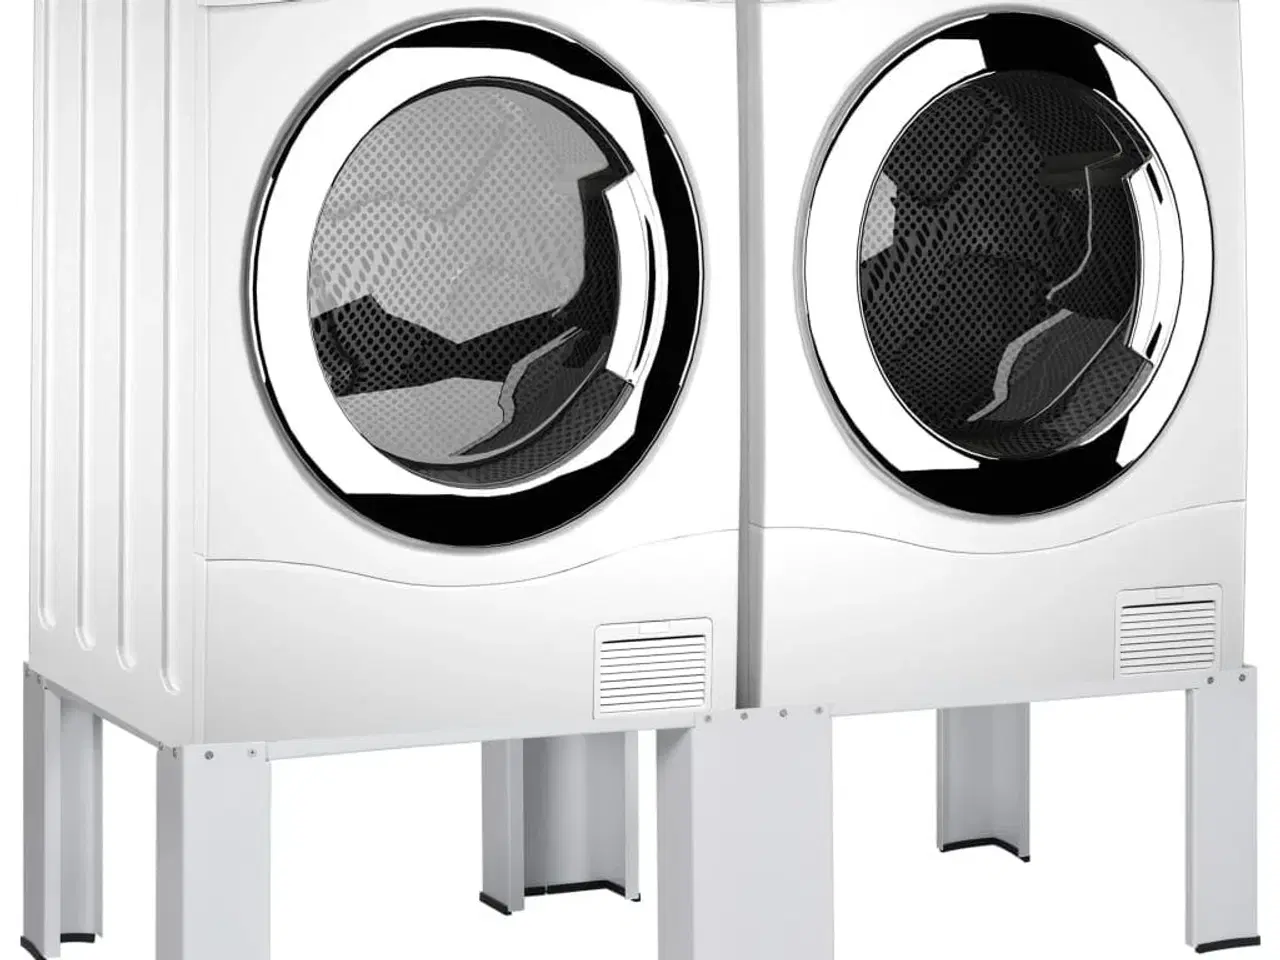 Billede 2 - Dobbelt sokkel til vaskemaskine og tørretumbler hvid